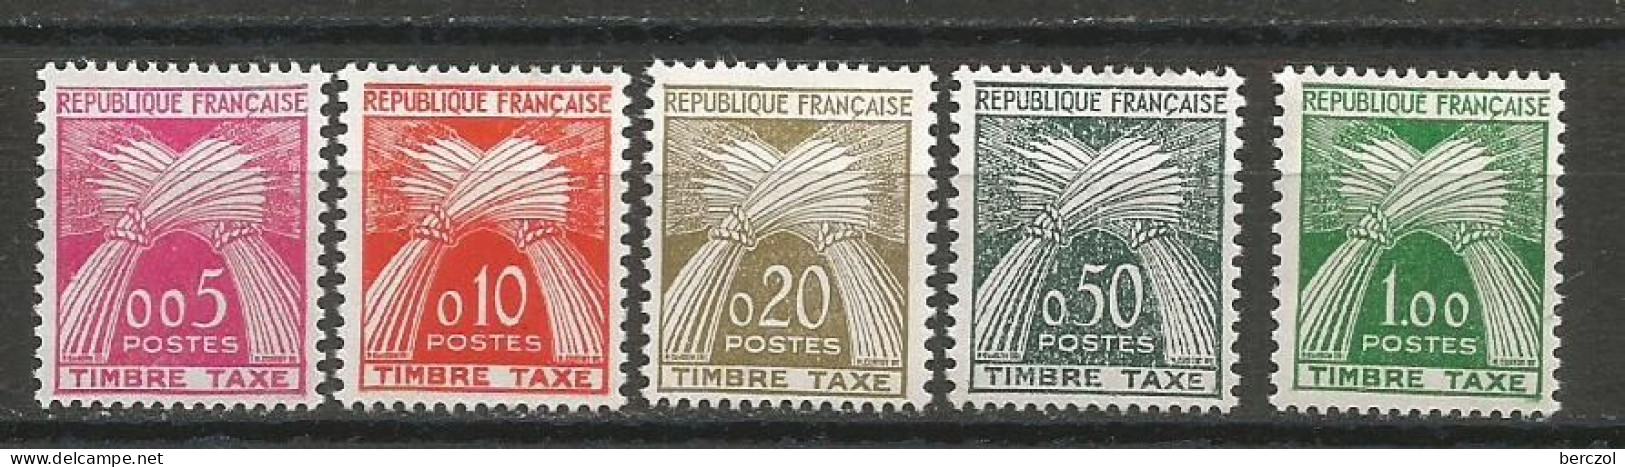 FRANCE ANNEE 1960 TAXE LOT DE 5 TP N°90 à 94 NEUFS ** MNH TB COTE 70,00 €  - 1960-.... Mint/hinged